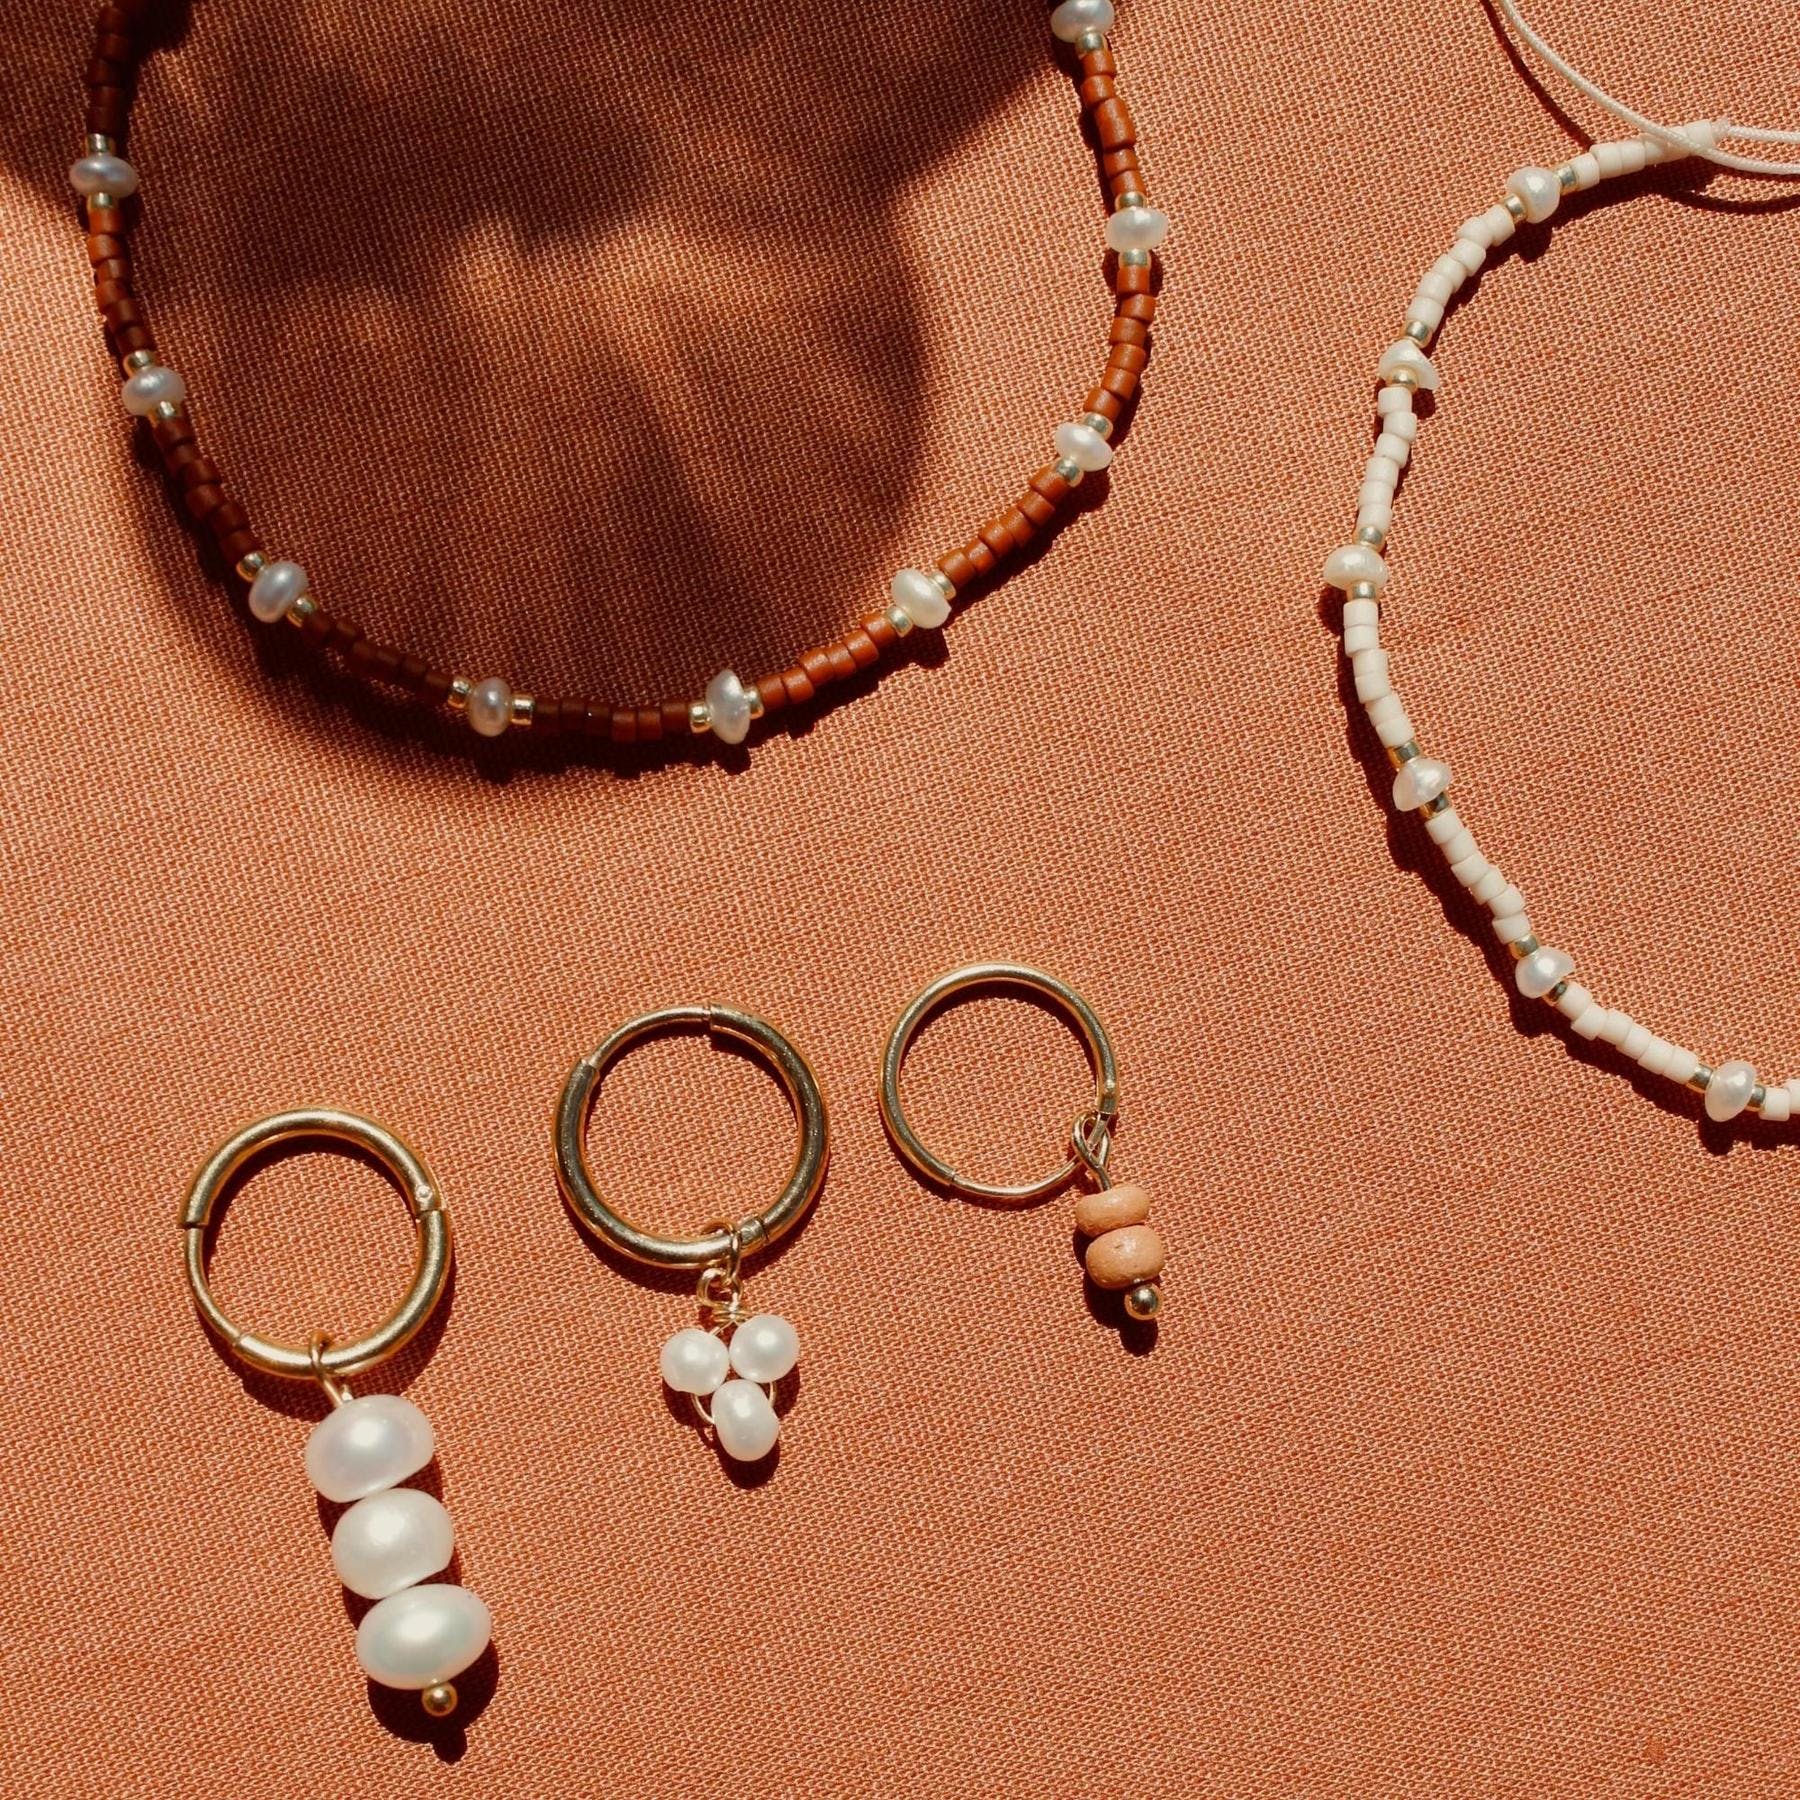 Terra bracelet with freshwater pearls